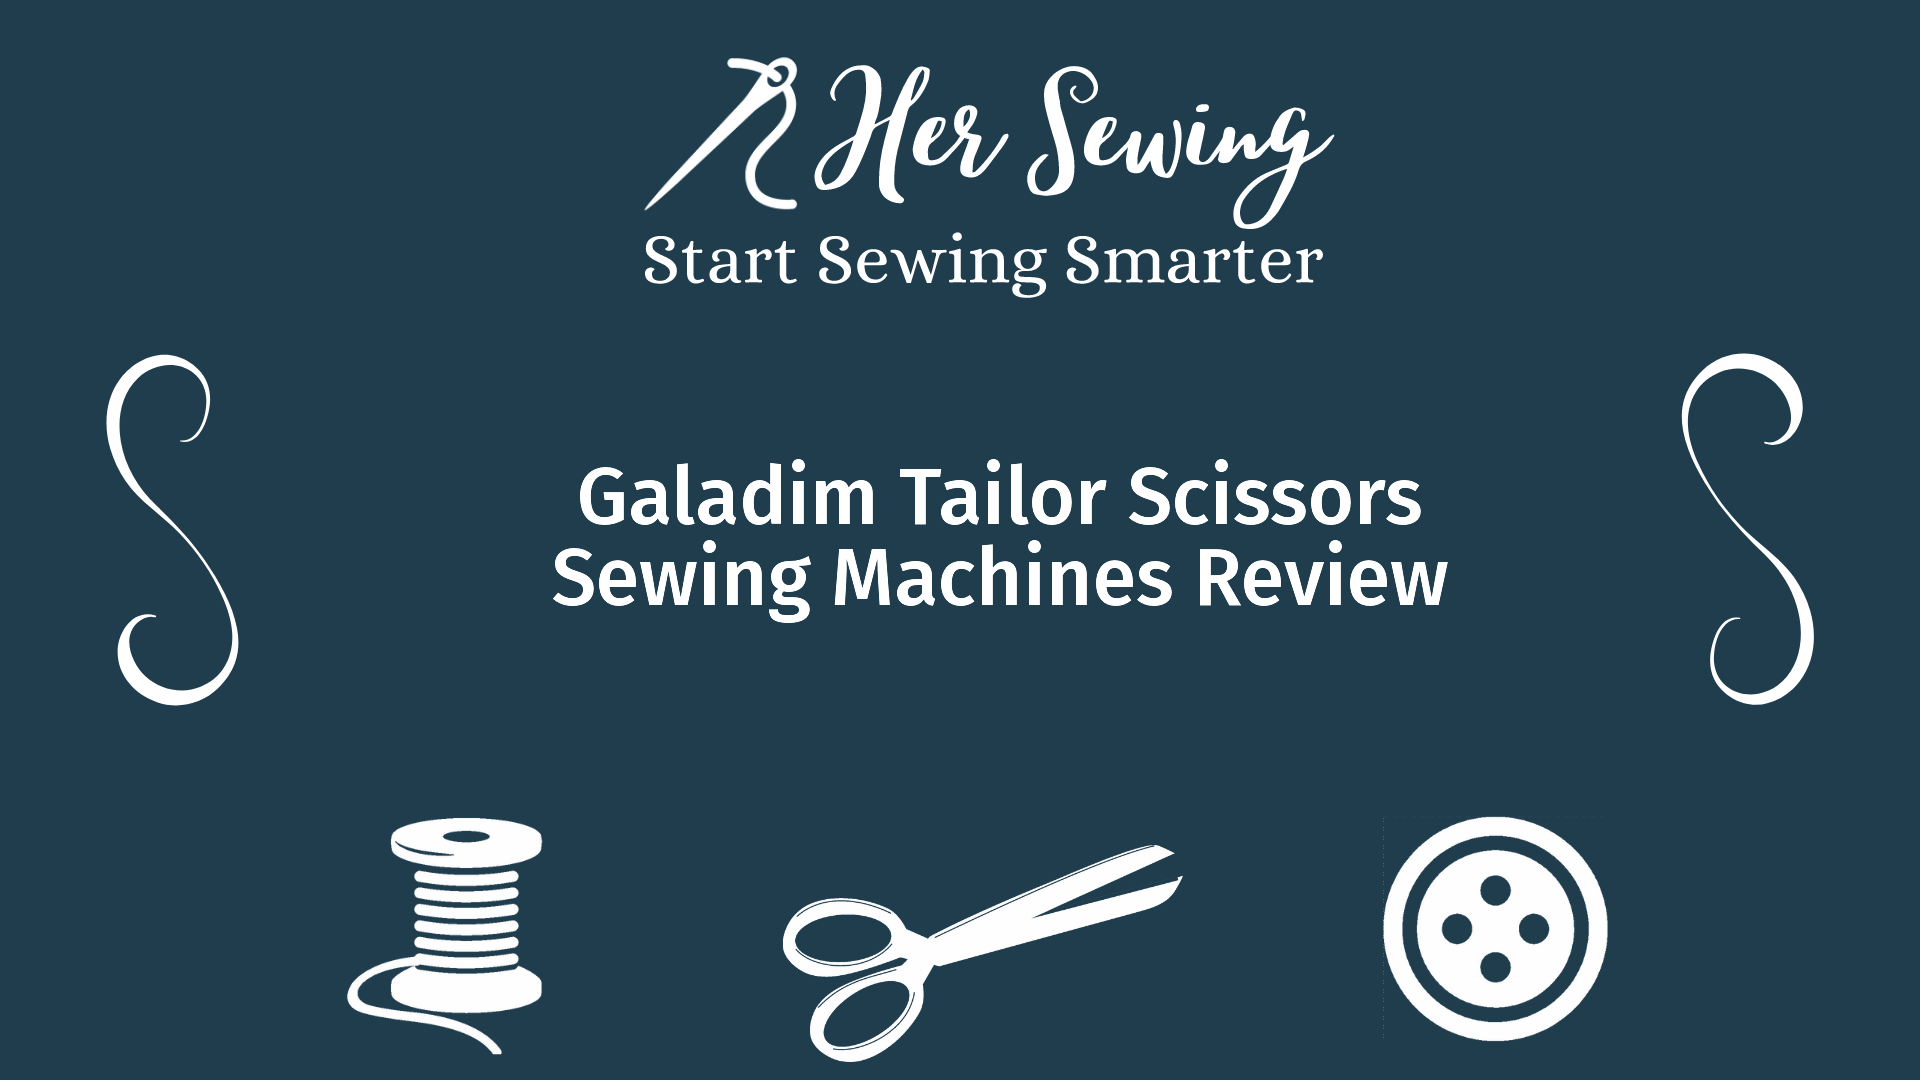 Galadim Tailor Scissors Sewing Machines Review